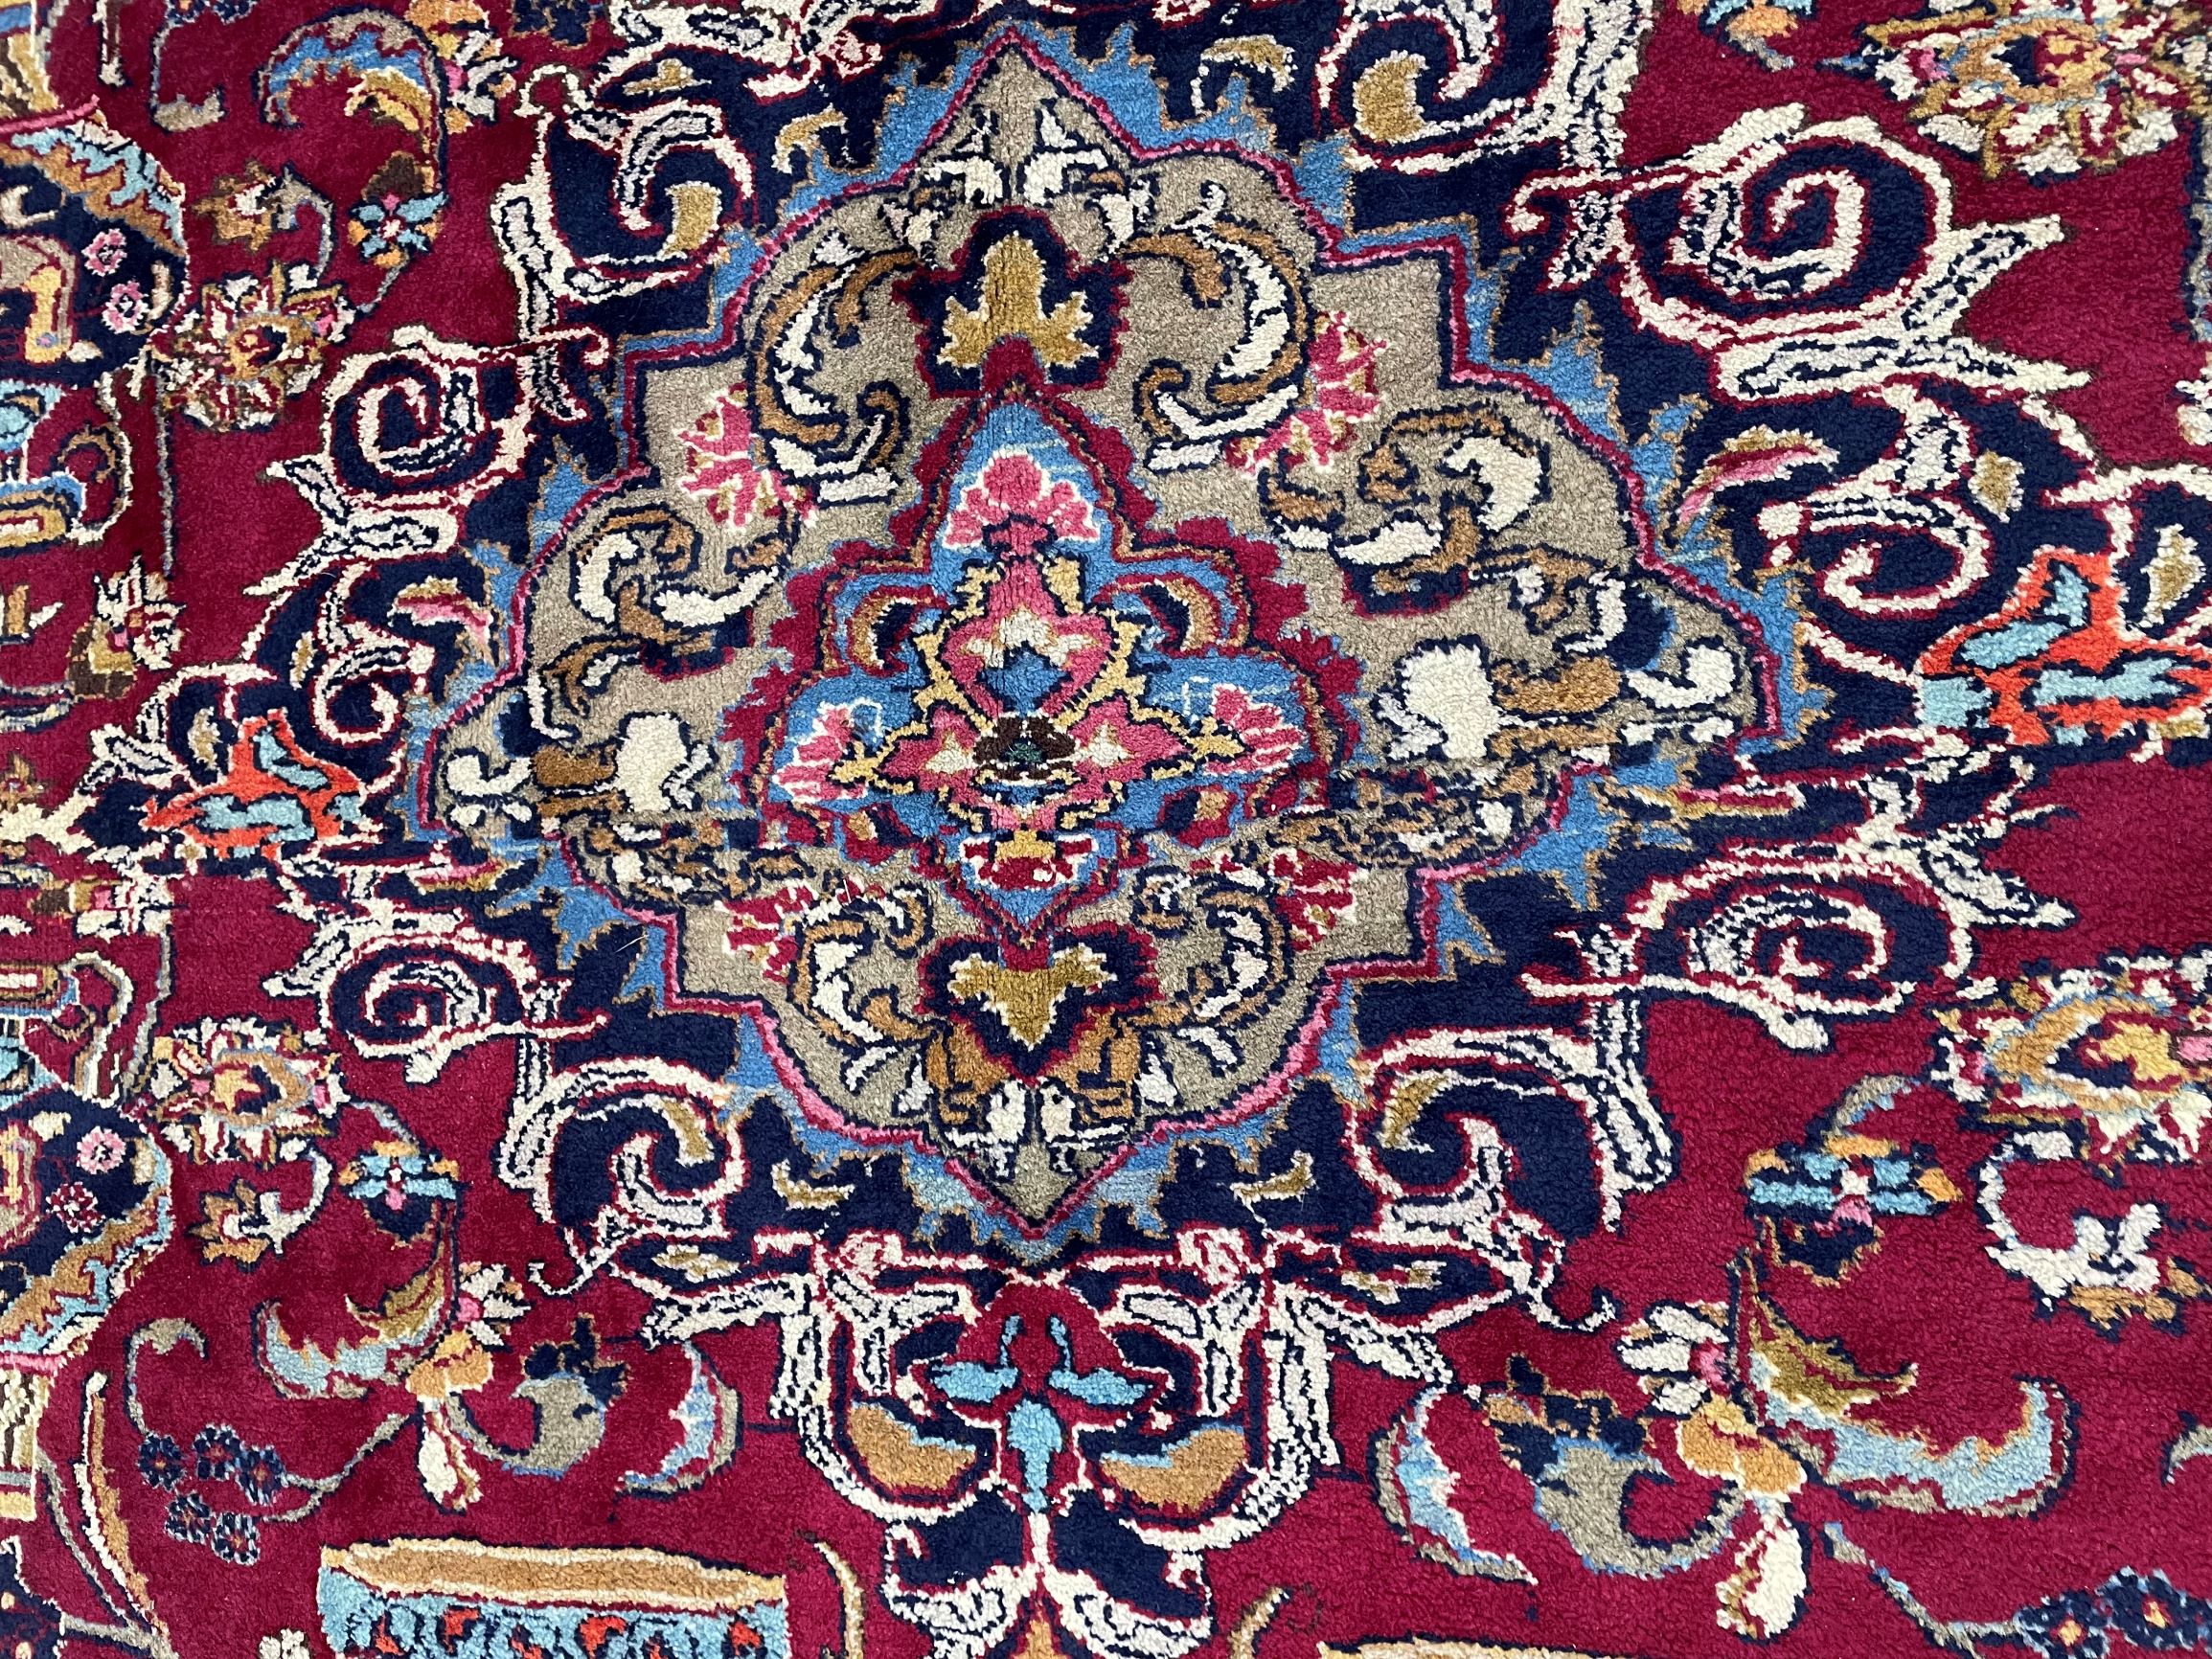 Large claret ground Persian Kashmar carpet with unique under earth design depicting vases & bowls - Image 2 of 2